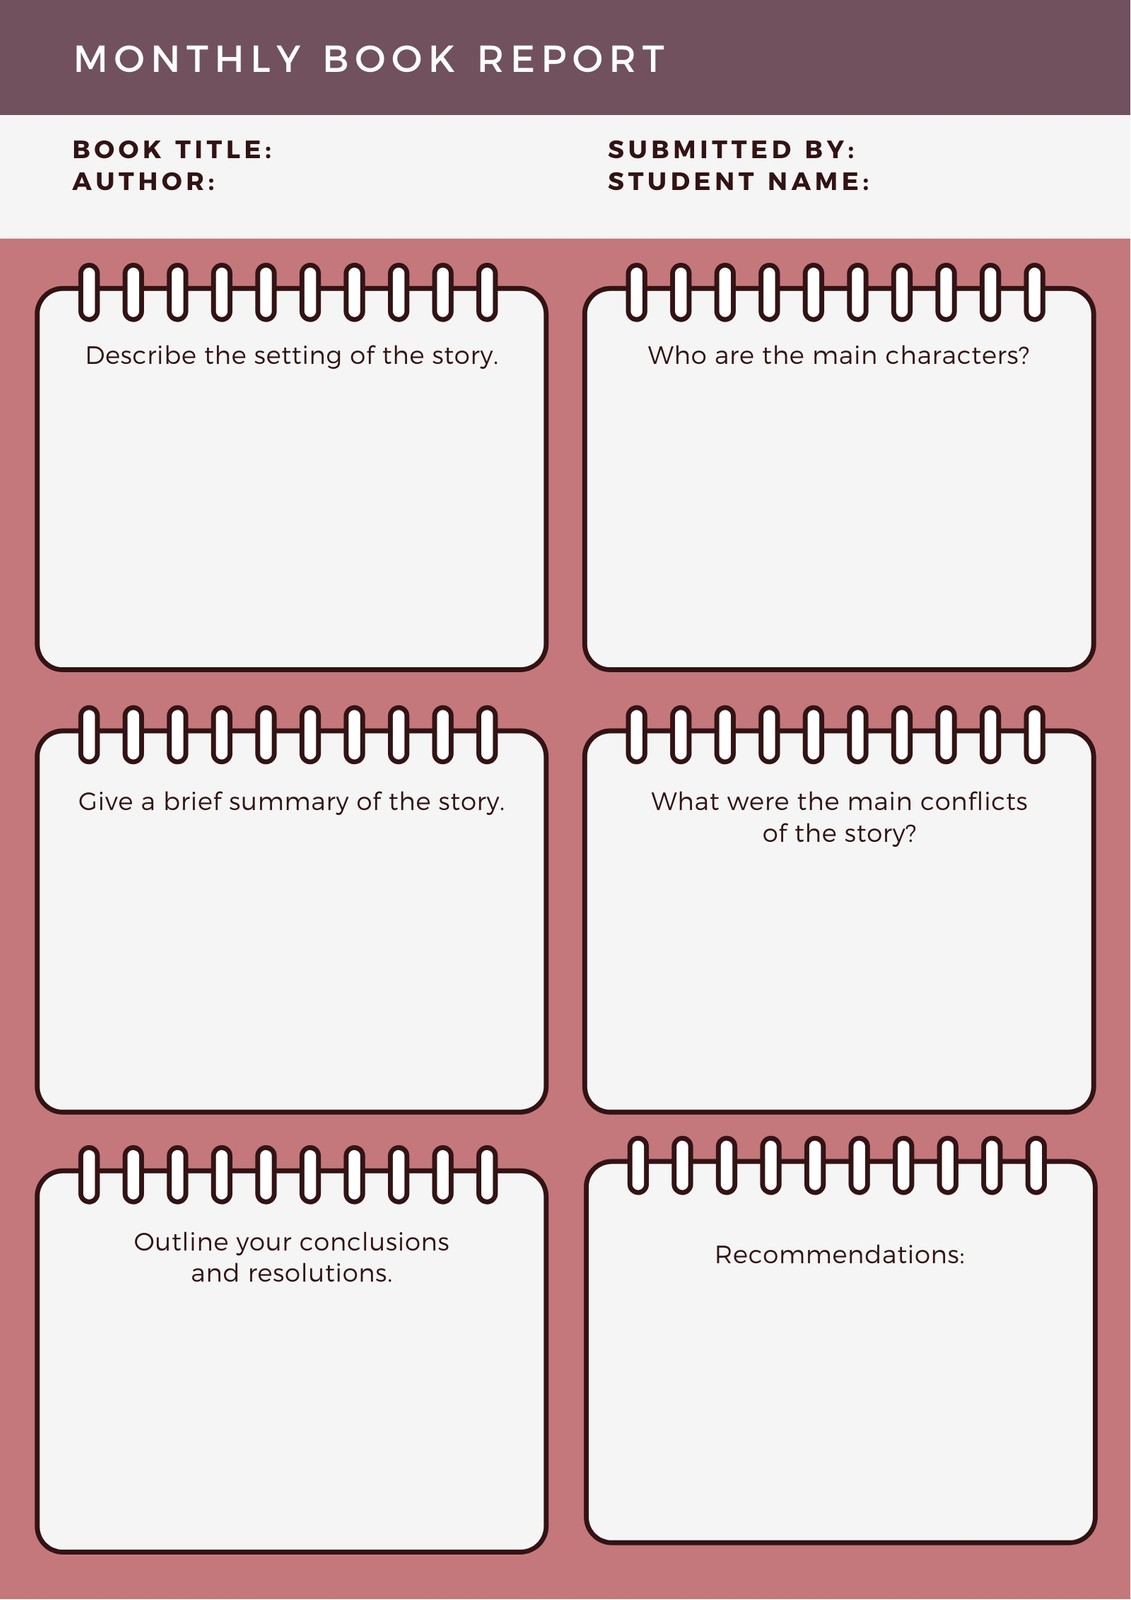 Free, printable, customizable report card templates  Canva Inside Boyfriend Report Card Template